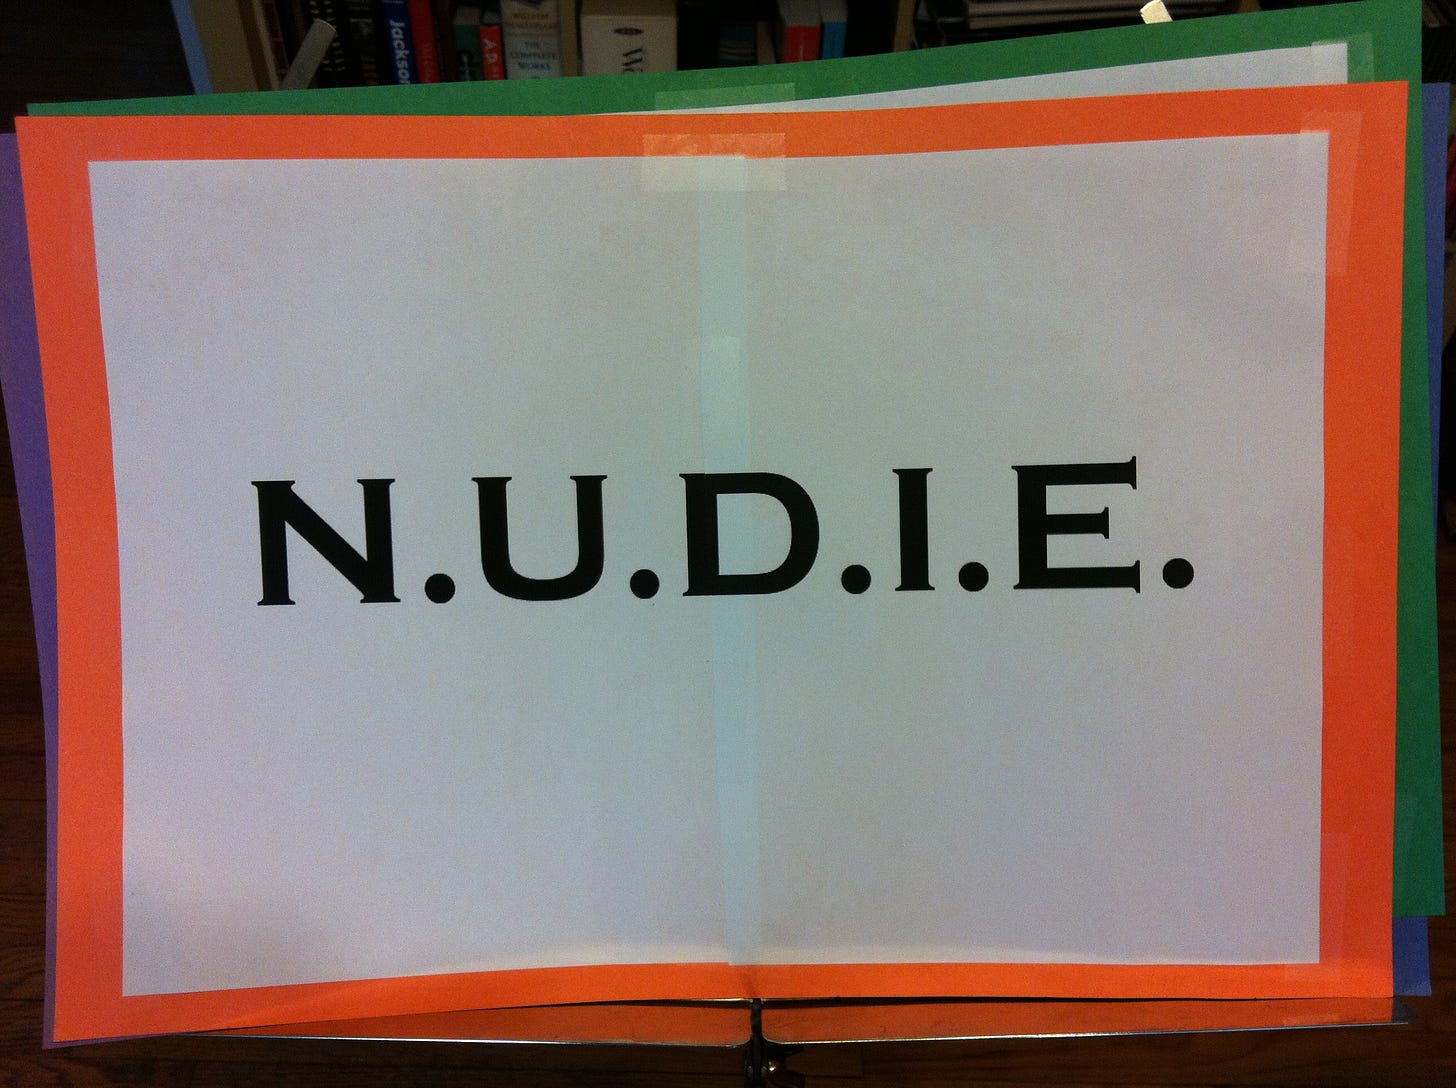 A sign mounted on orange construction paper reads: "N.U.D.I.E."